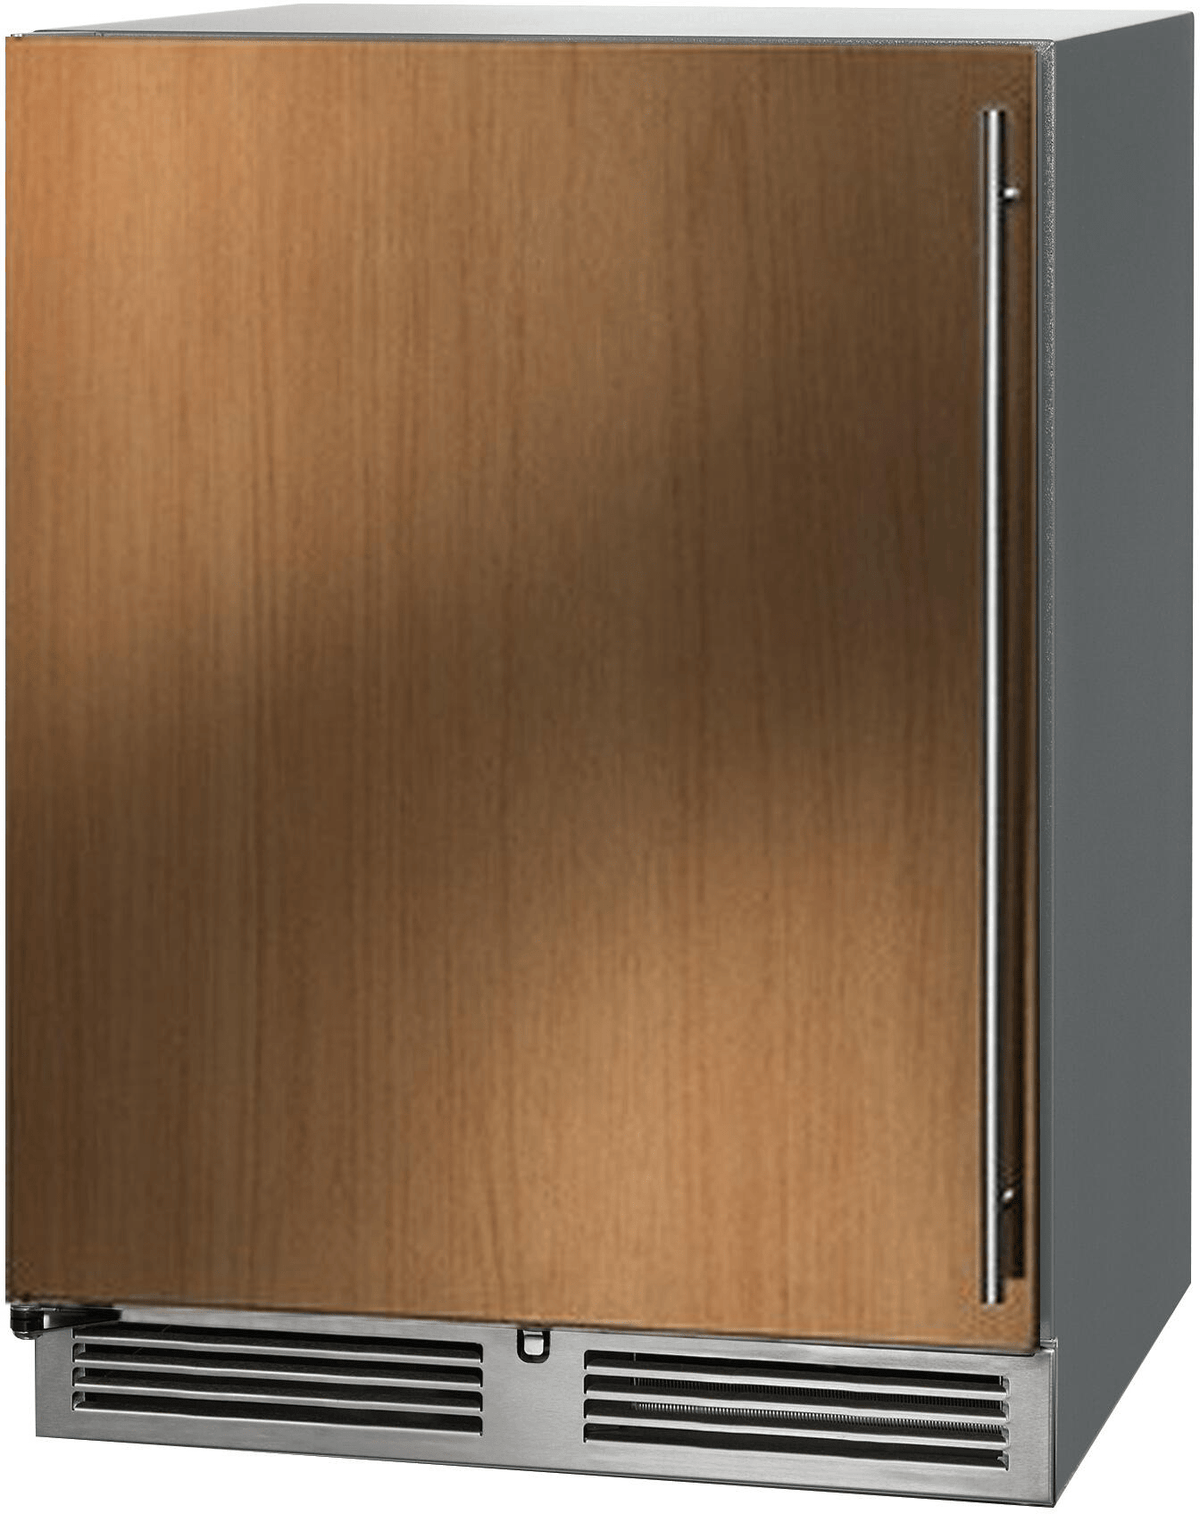 Perlick Refrigeration + Cooling Panel Ready Glass Door - Left Hinge Perlick 24&quot; C-Series Built-In Outdoor Refrigerator / HC24RO-4